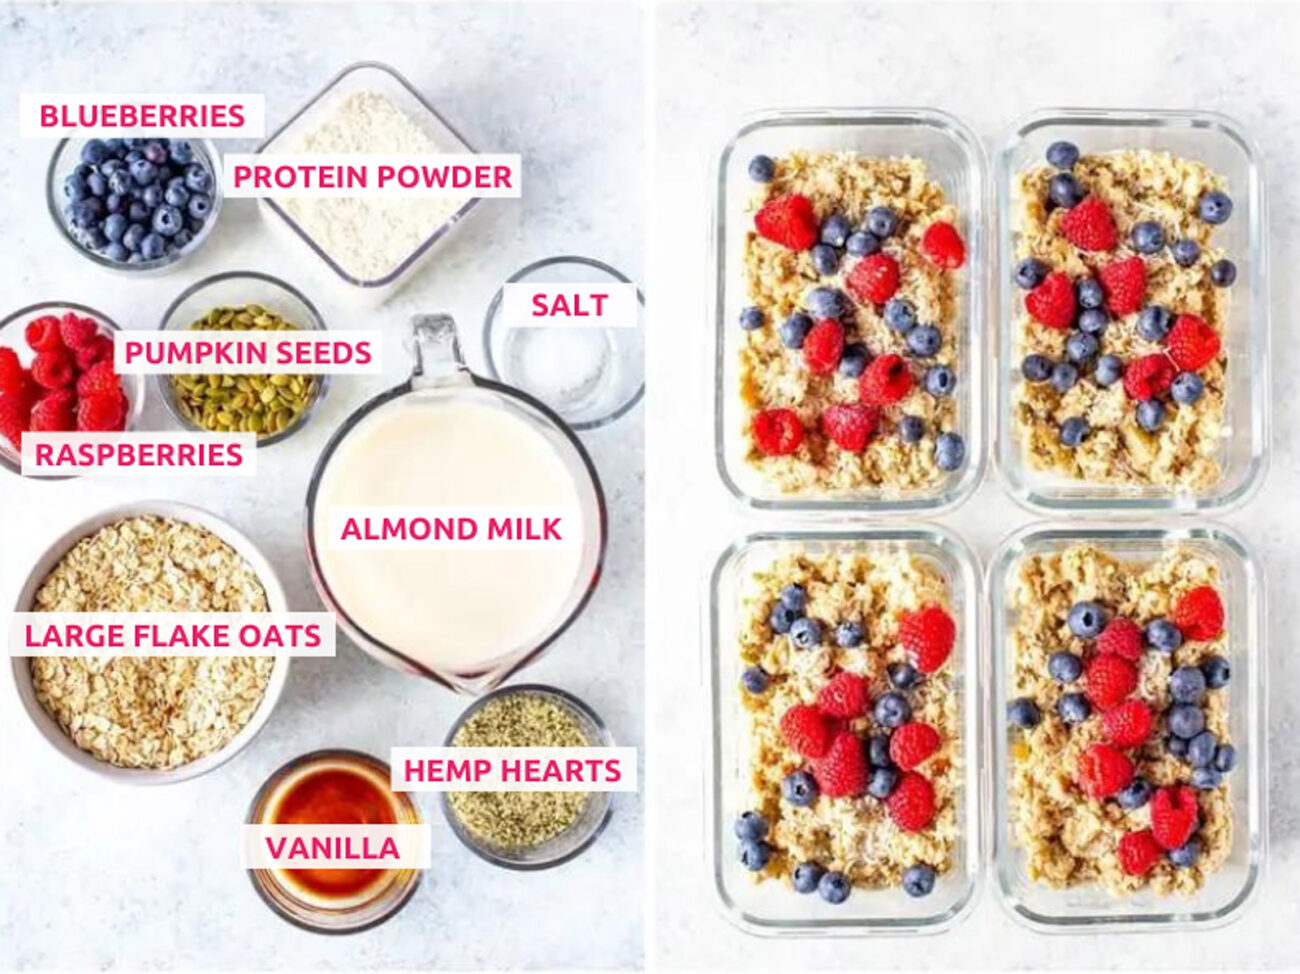 Ingredients for protein oatmeal: large flake oats, hemp hearts, vanilla, raspberries, blueberries, pumpkin seeds, protein powder, almond milk and salt.